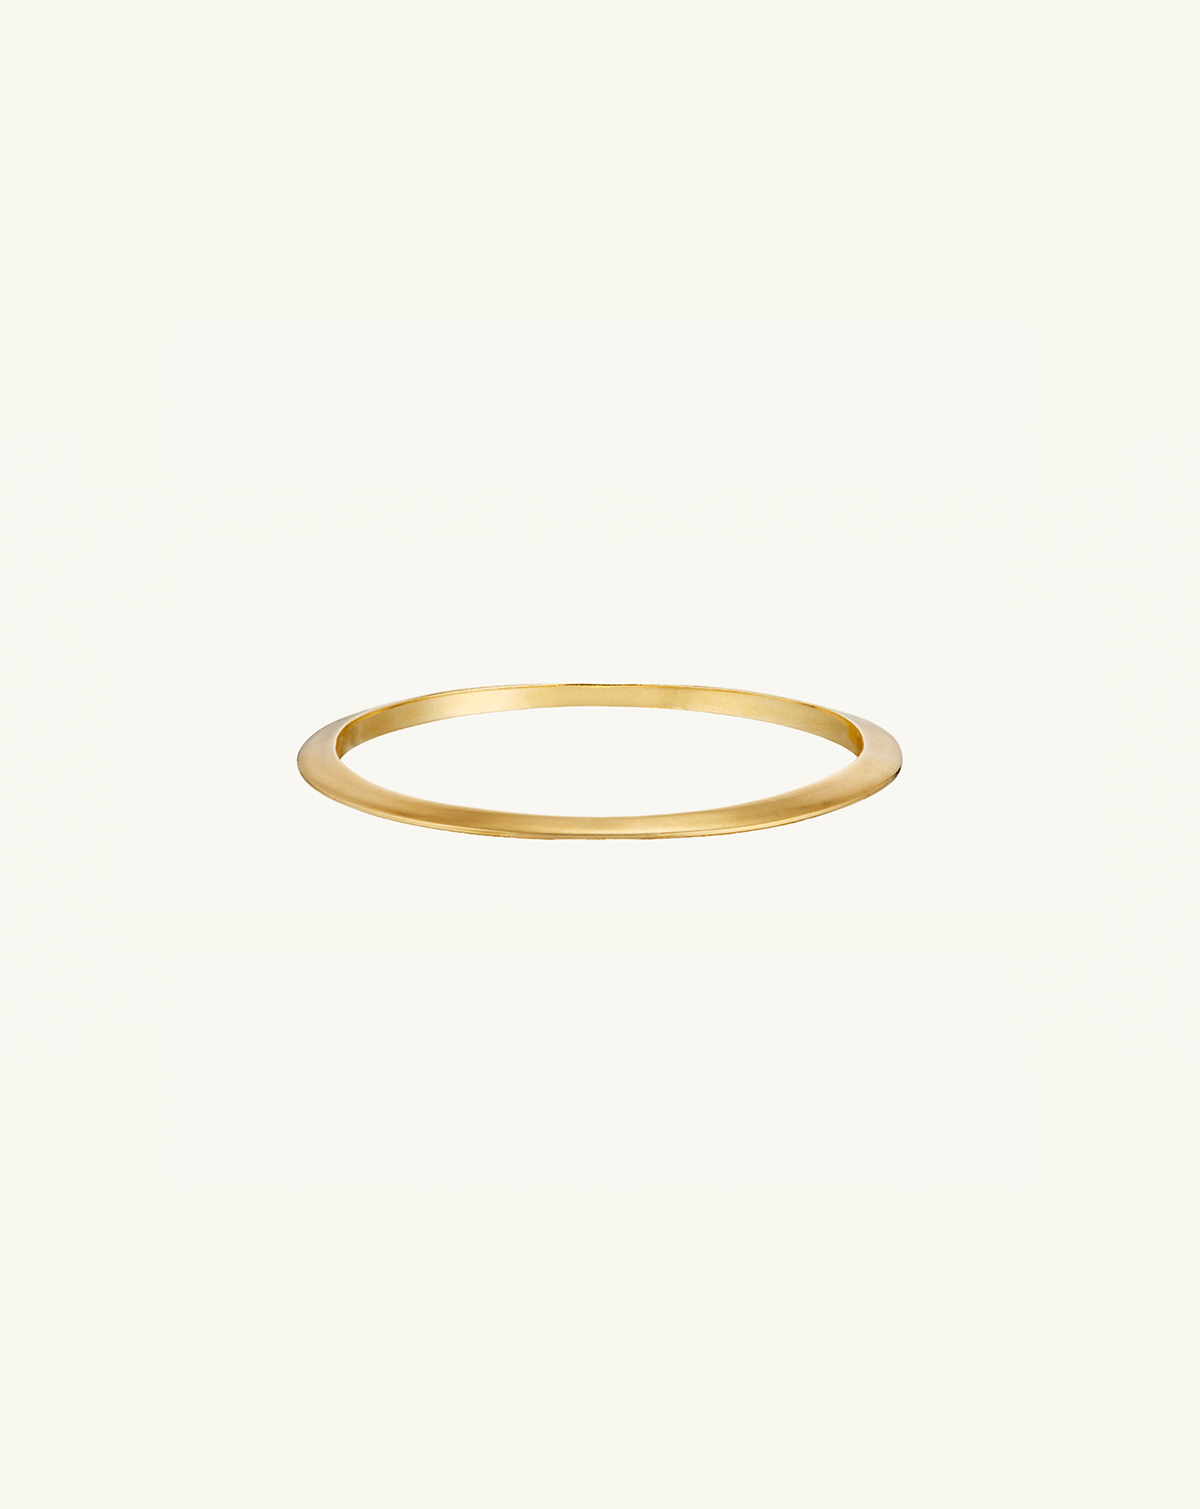 Product image of i seira gold oval bangle on flat surface